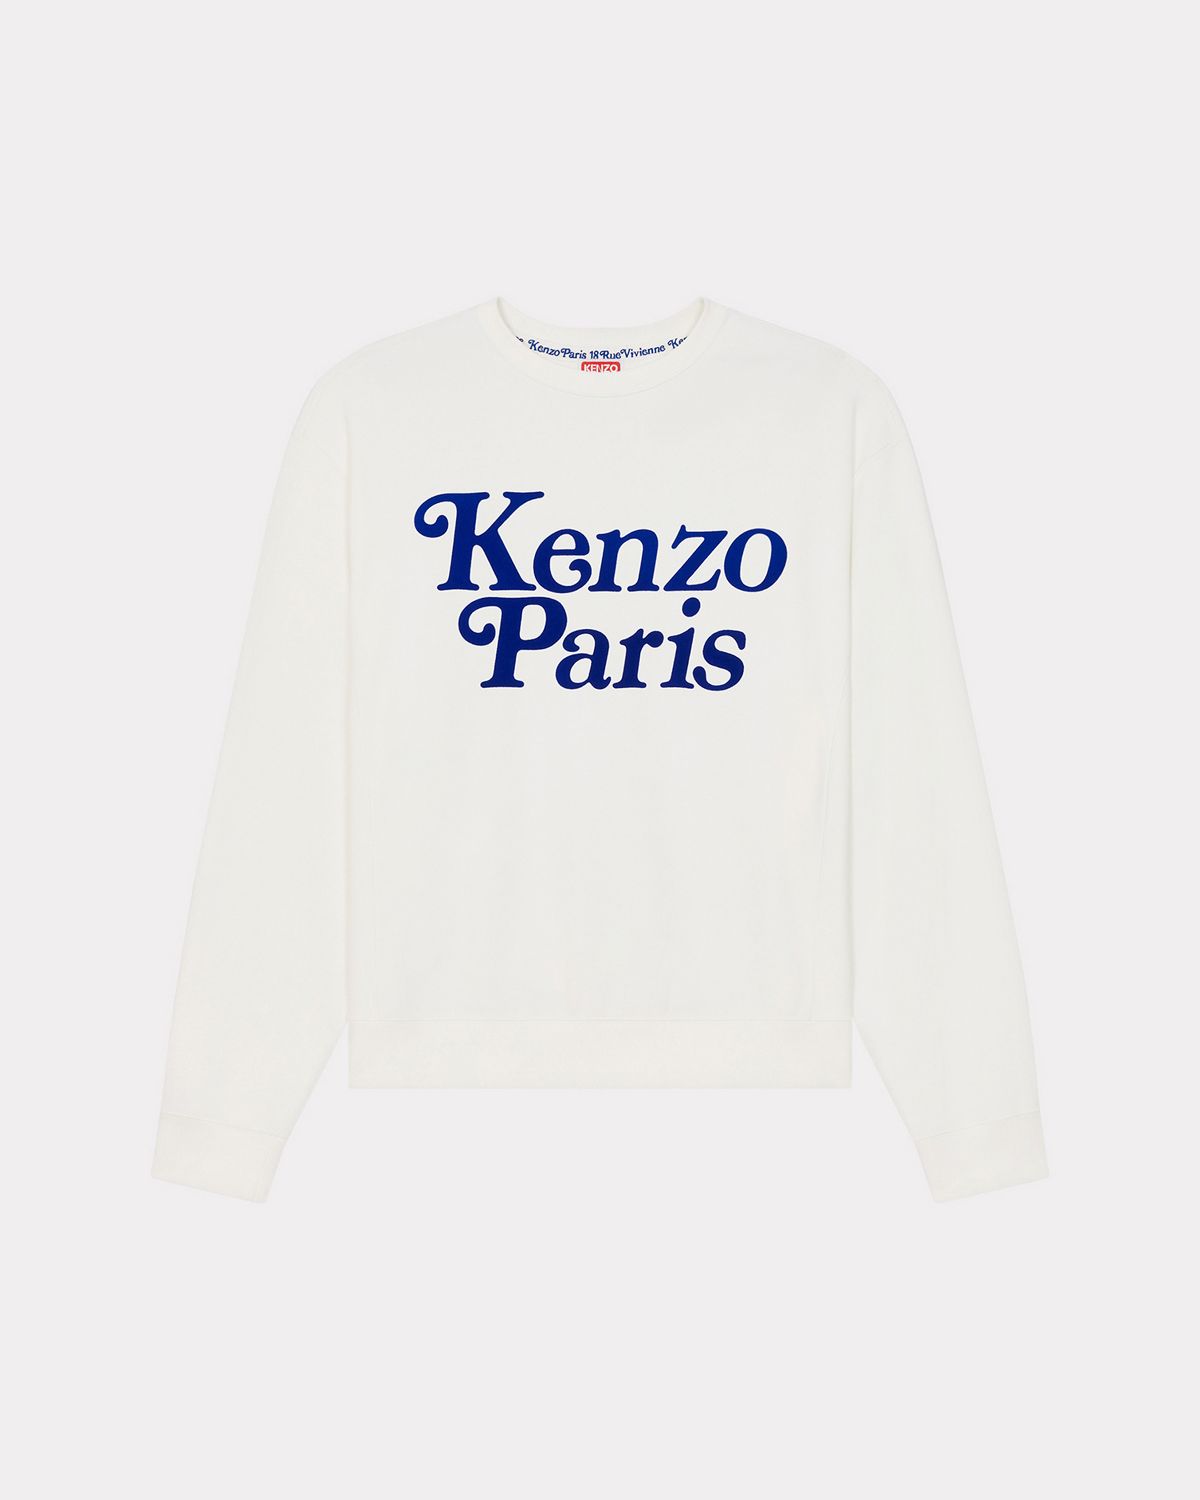 KENZO - 【残りわずか】【限定】 KENZO x VERDY / KENZO BY VERDY CLASSIC SWEAT /  クルーネックスウェット (オフホワイト) | Confidence